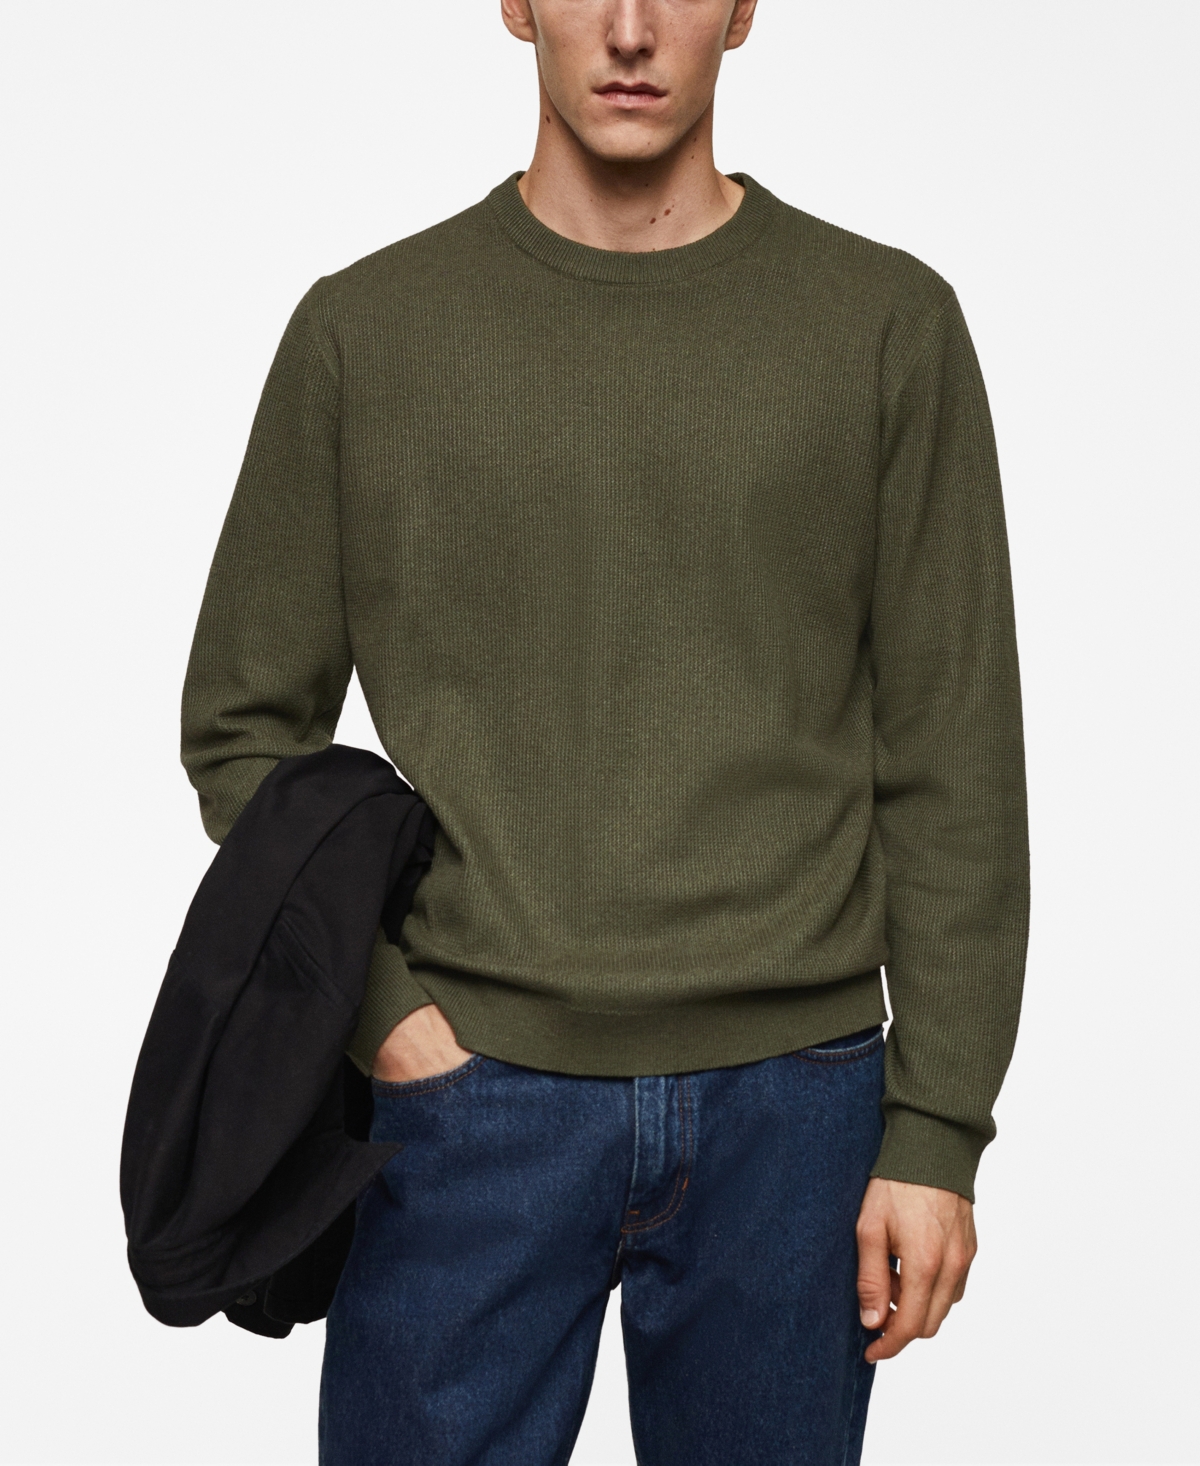 Men's Structured Cotton Sweater - Medium Heather Gray